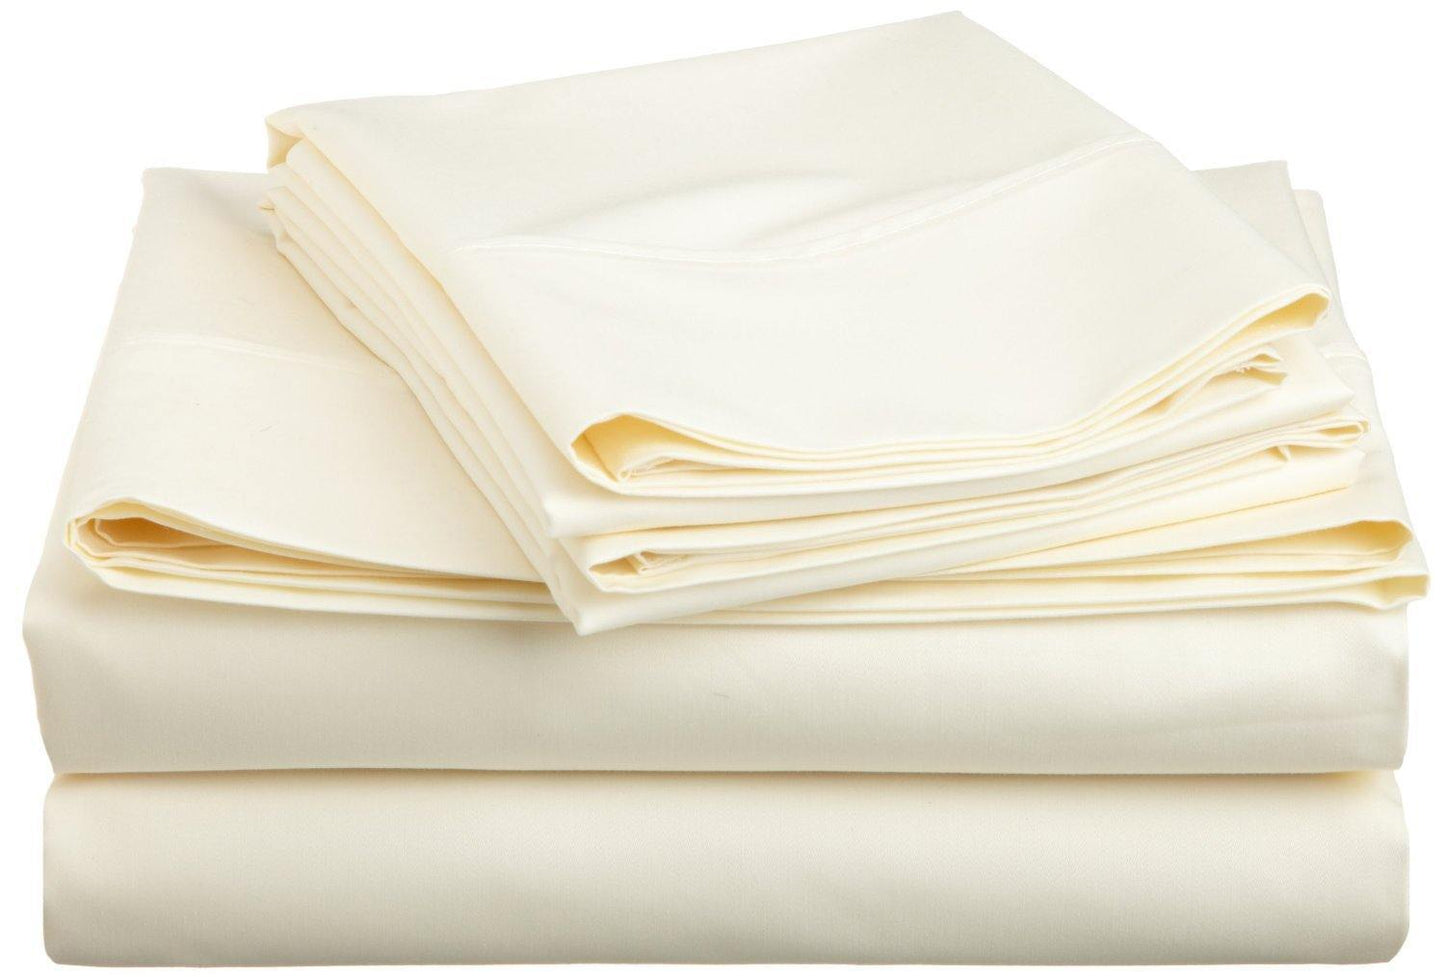 1500 Series Wrinkle Resistant Solid Sheet Set FredCo